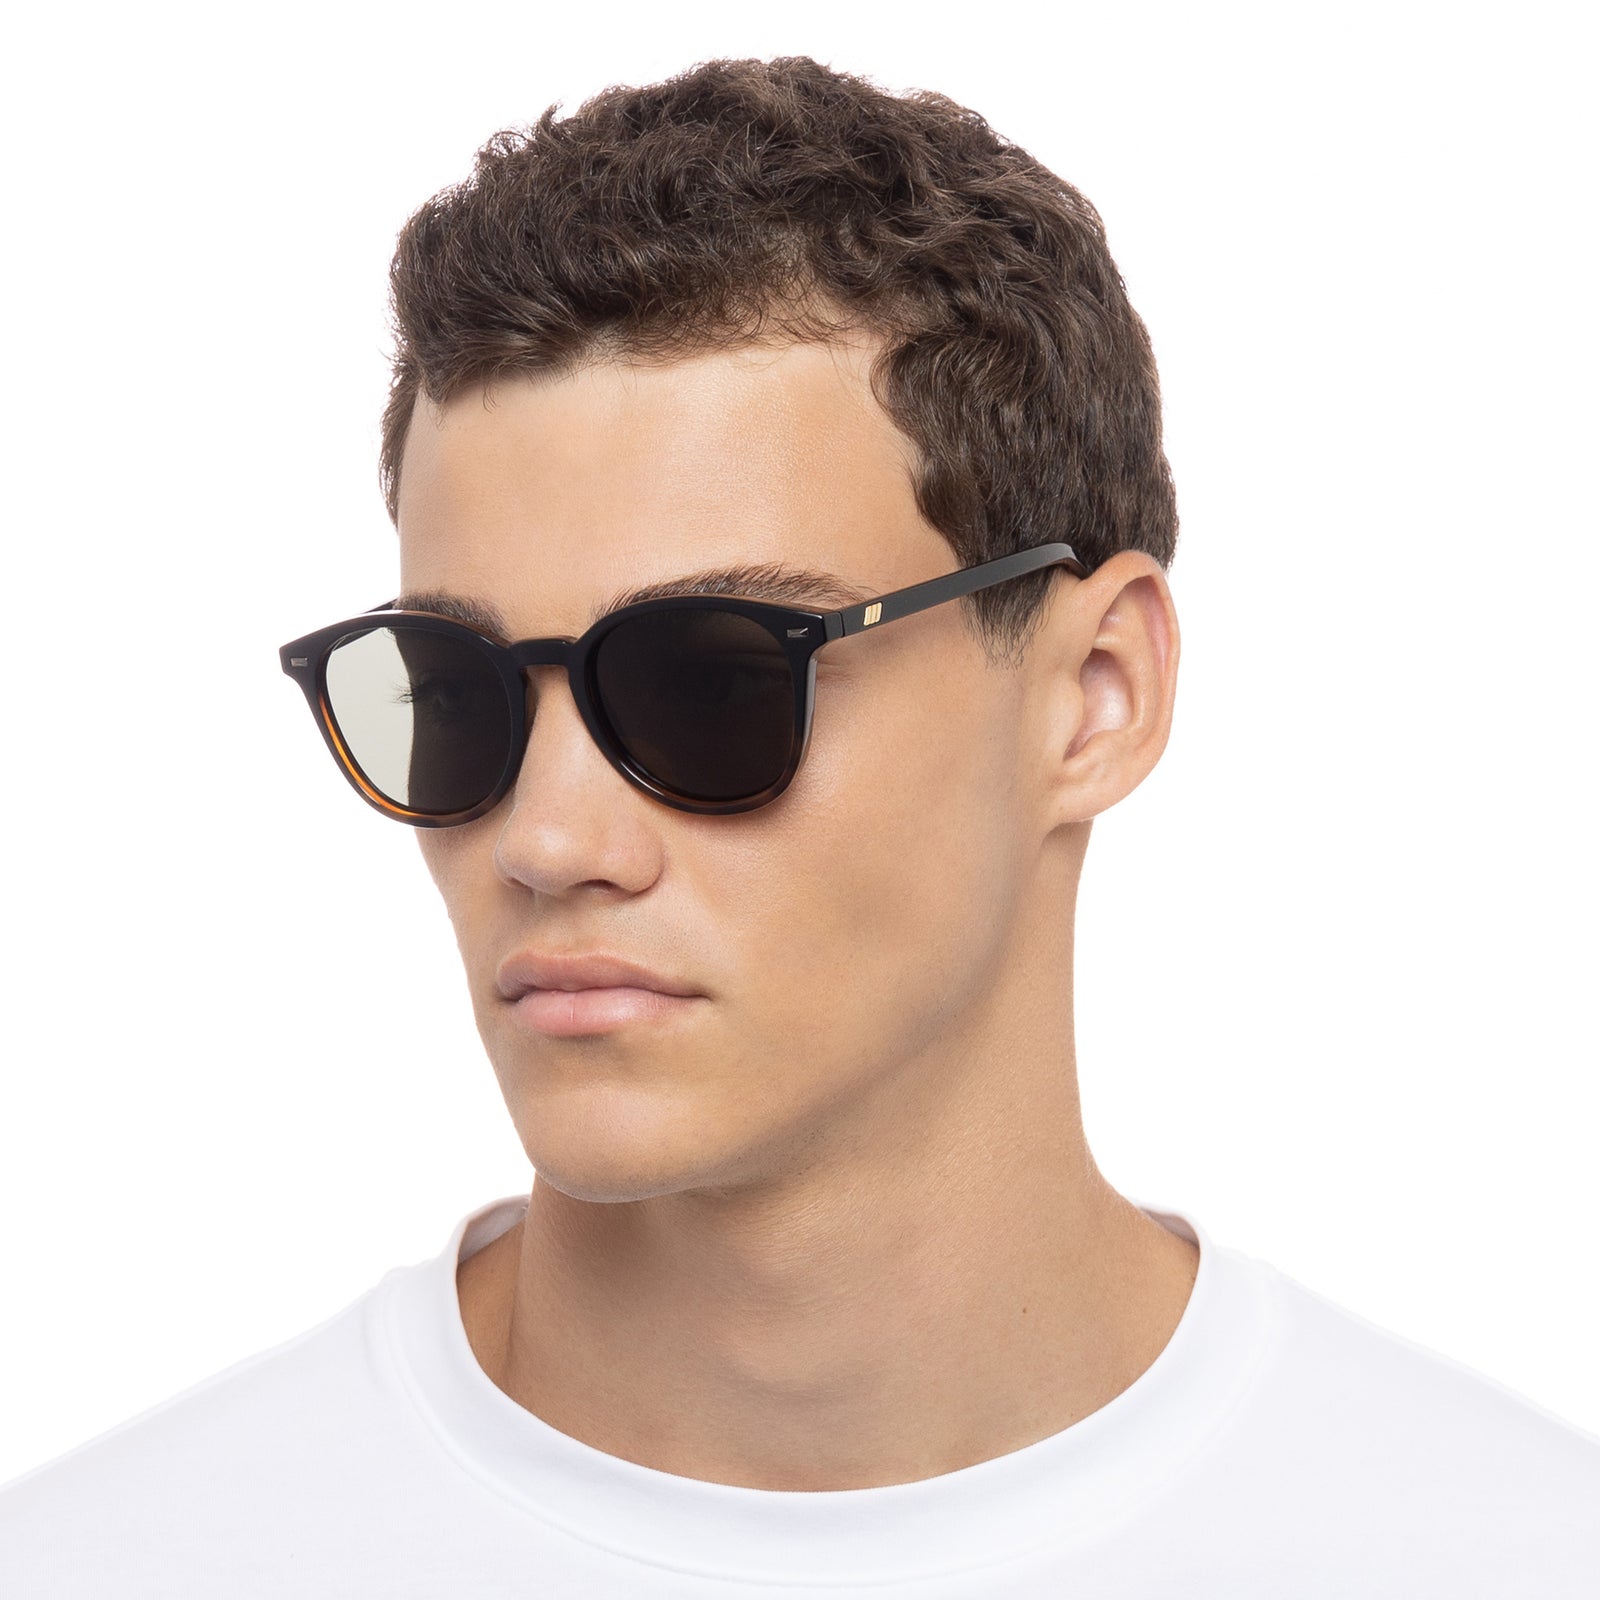 Bandwagon Black Tort Uni-Sex Round Le | Sunglasses Specs